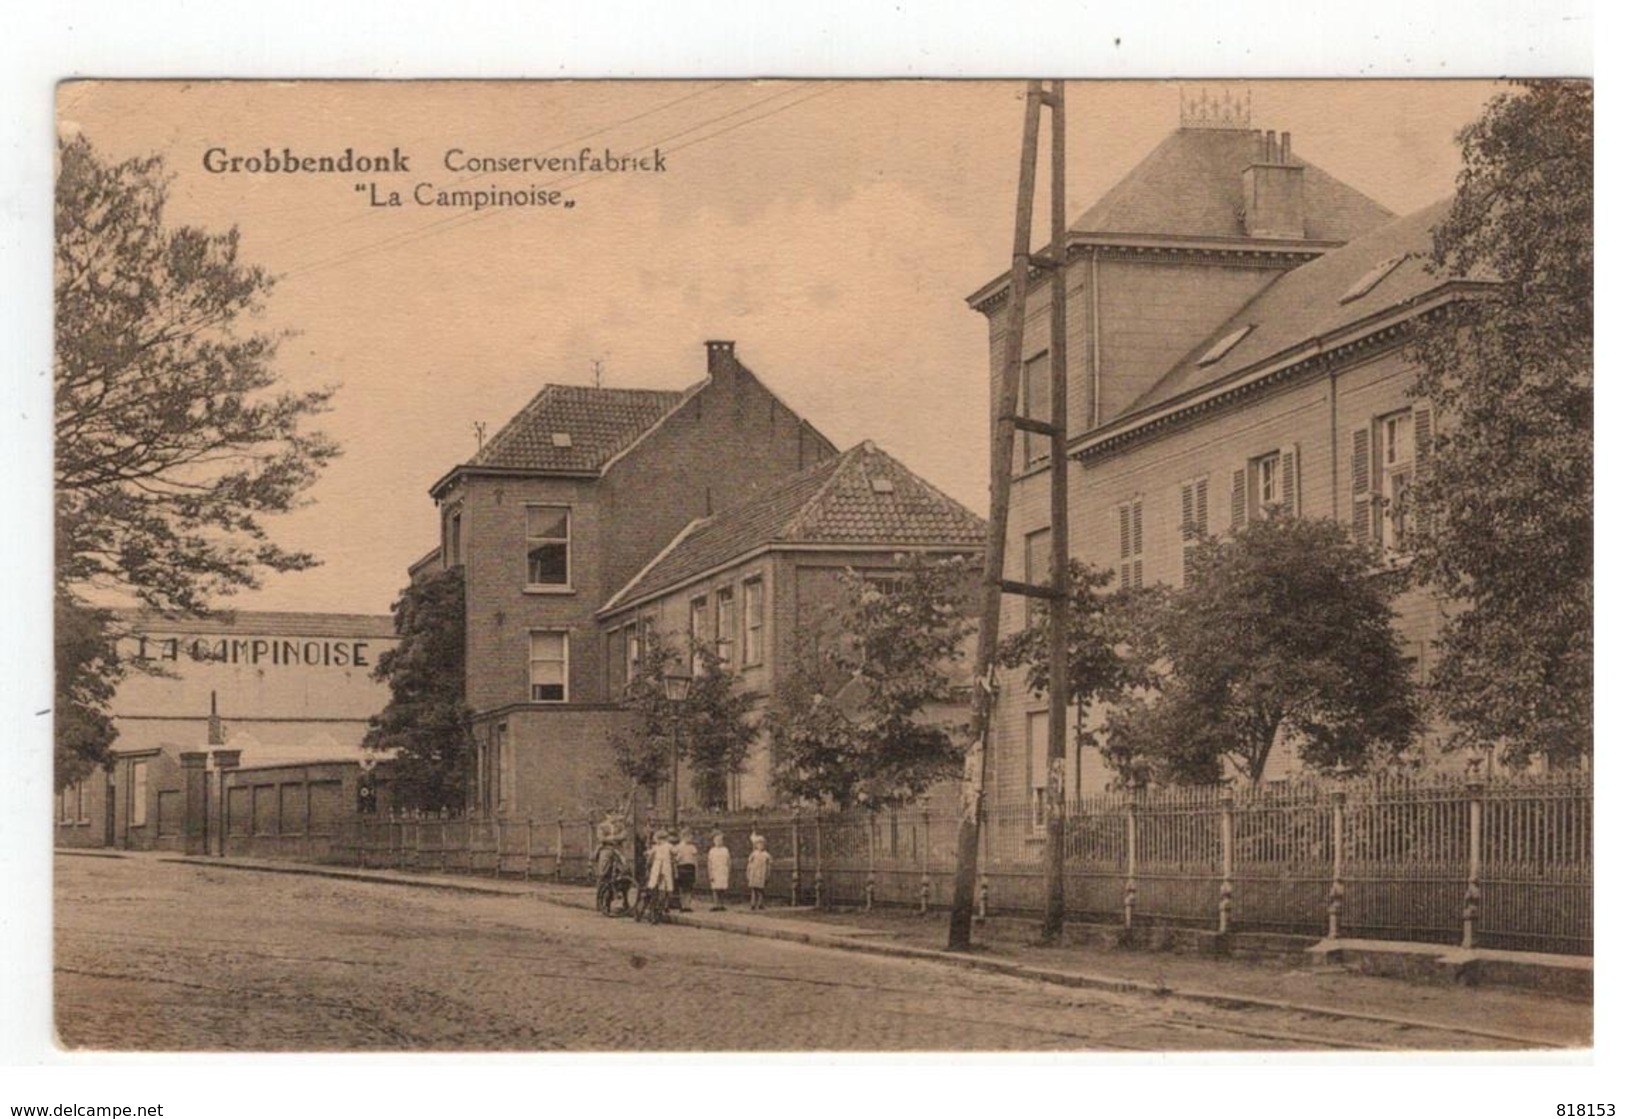 Grobbendonk  Conservenfabriek "La Campinoise" - Grobbendonk